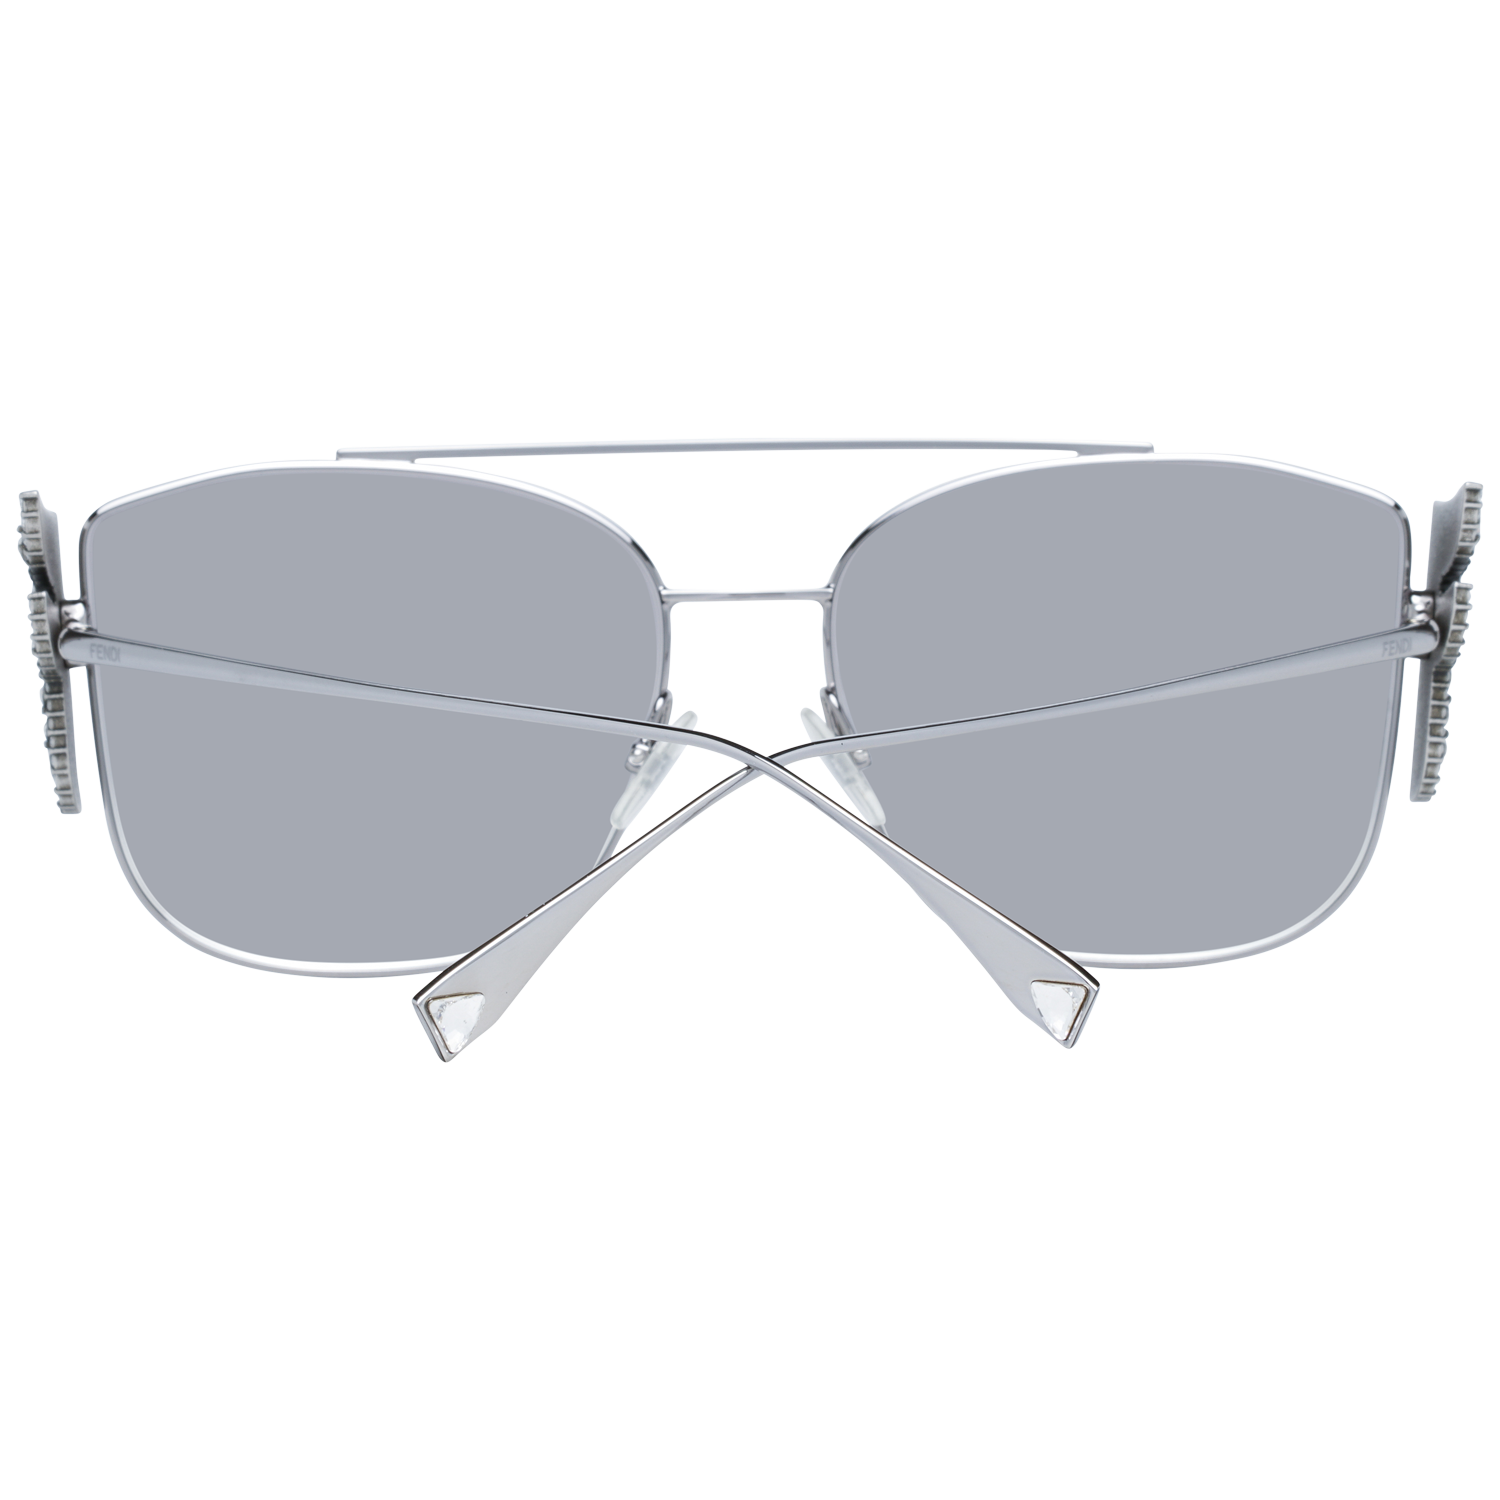 Fendi Sunglasses FS 143 Satin Crystal 52-17-140 Made in Italy | eBay